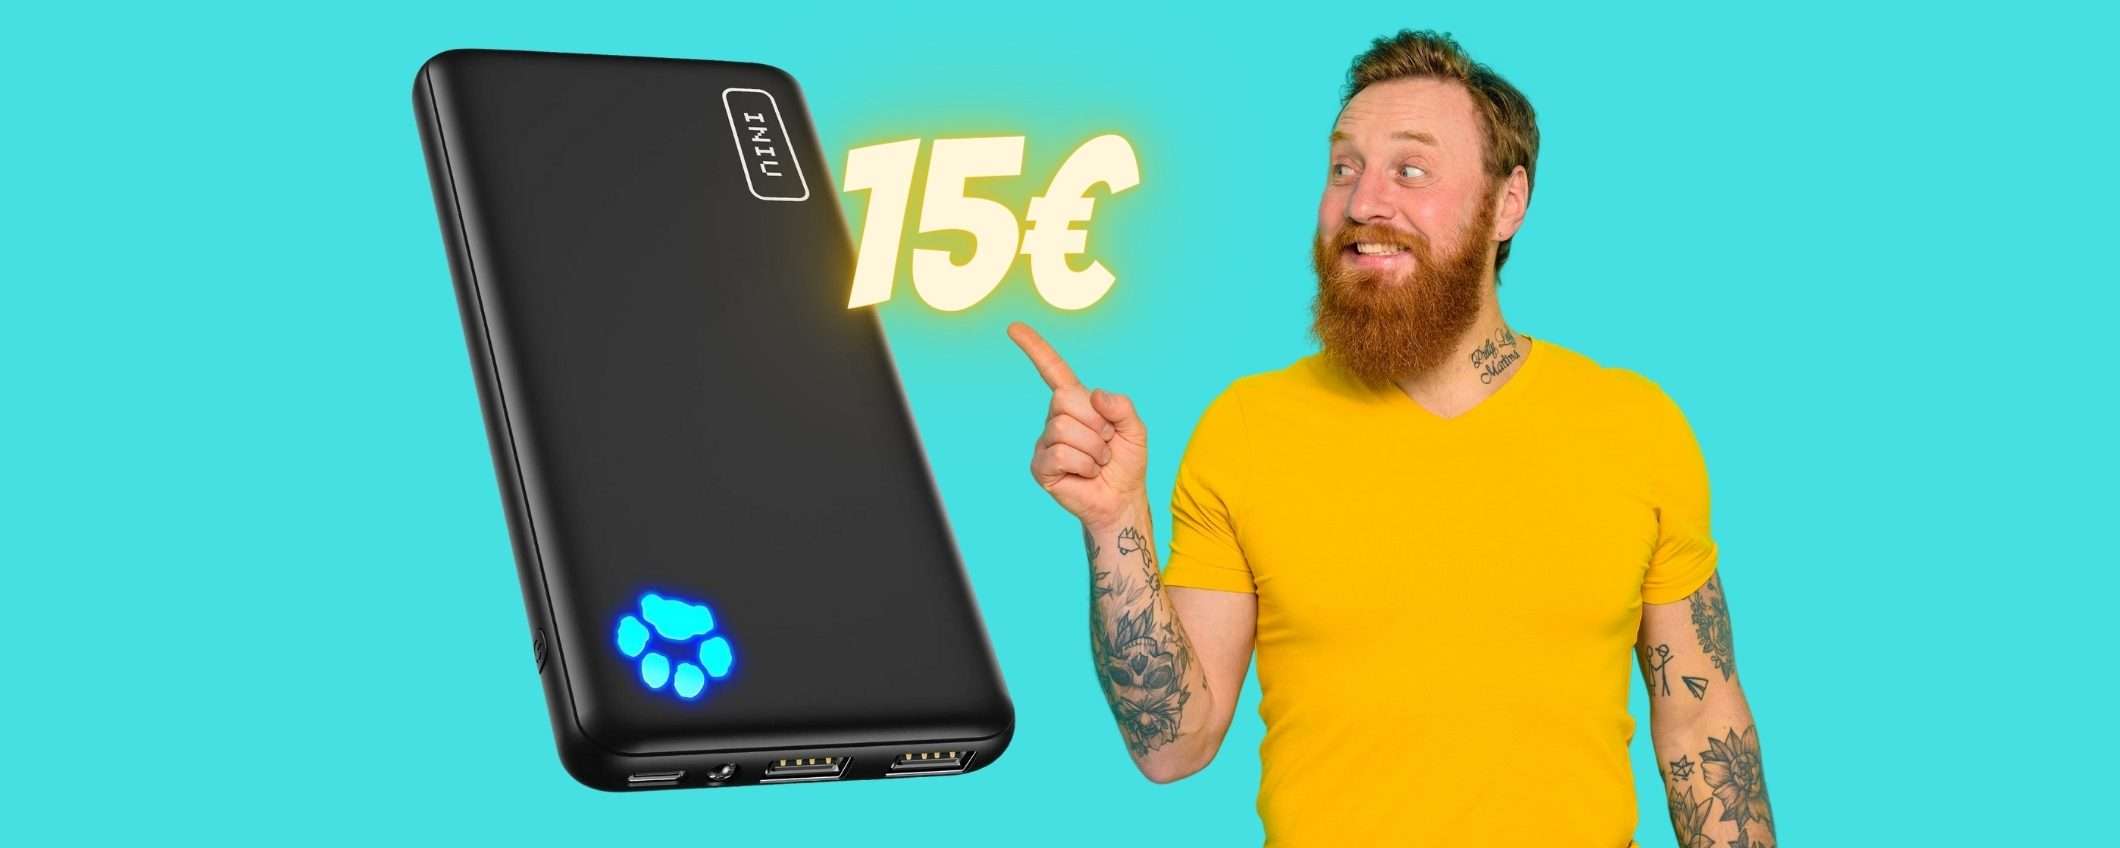 Power Bank portatile super potente con DOPPIO SCONTO a 15€